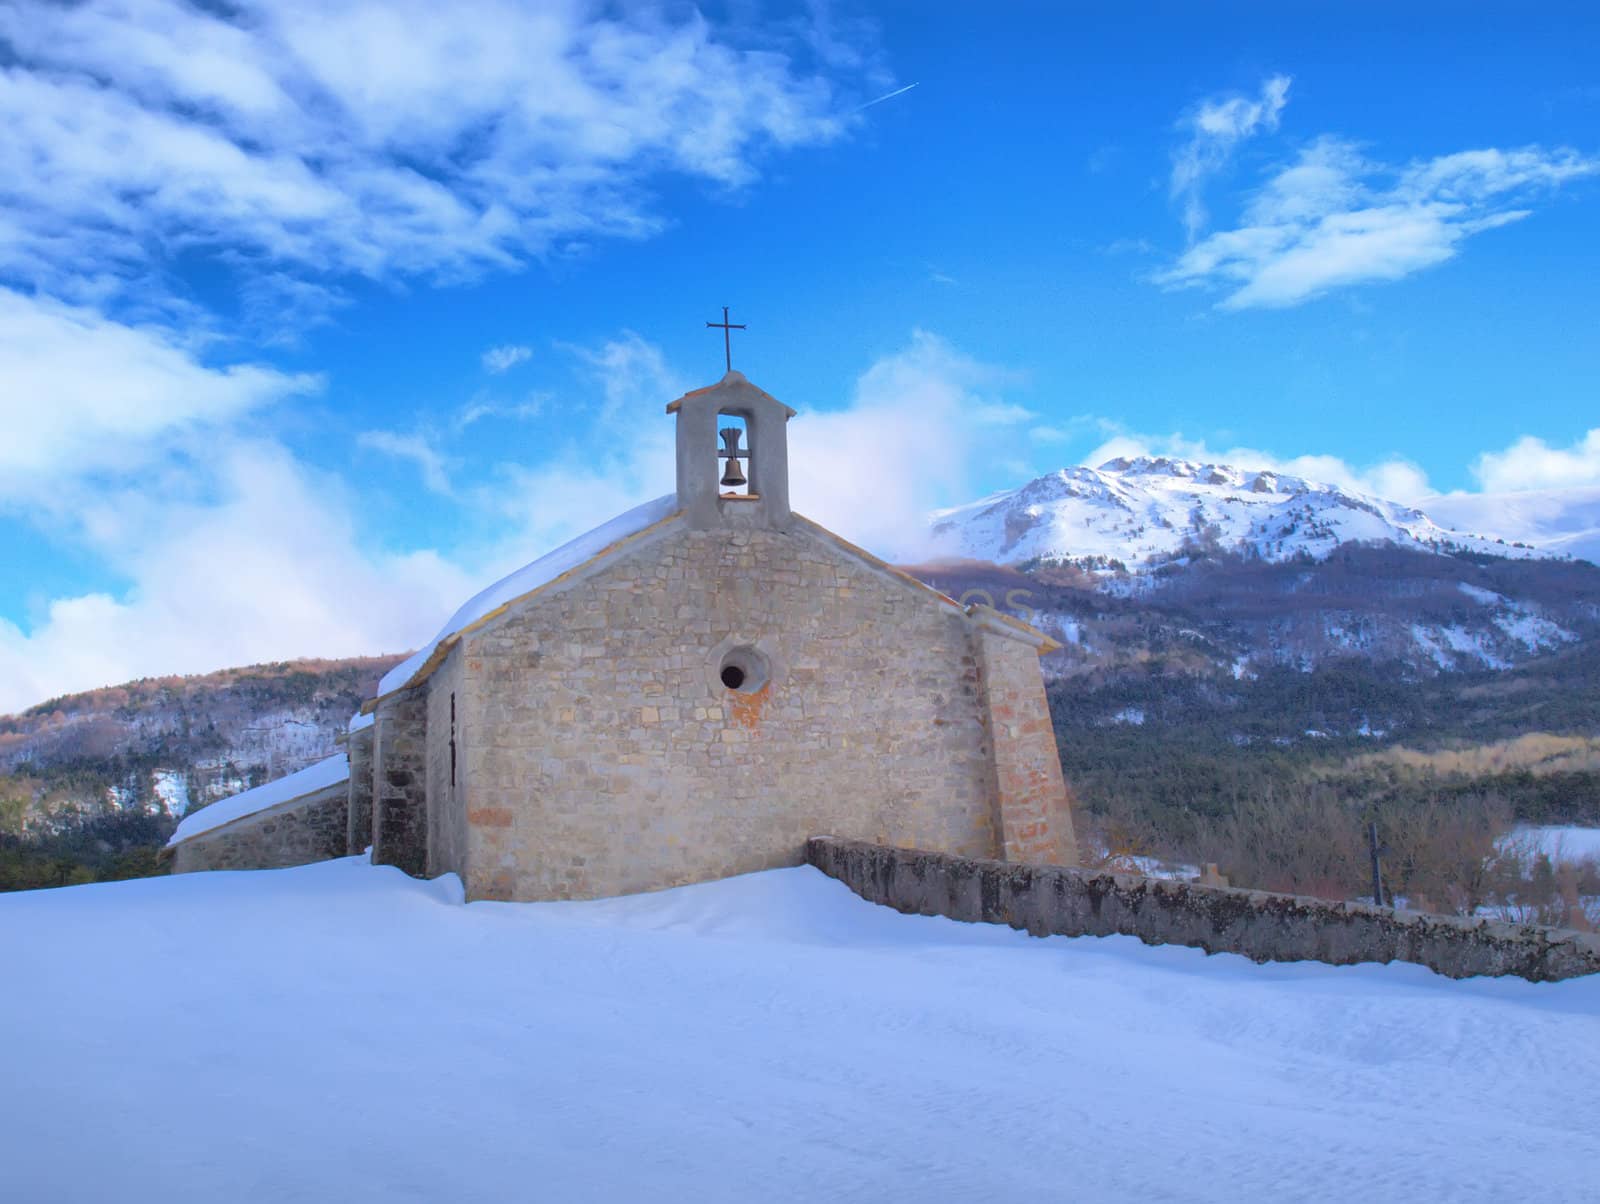 Provence chapel of Saint-Valvert in a snowy landscape of Vergons-en-Provence